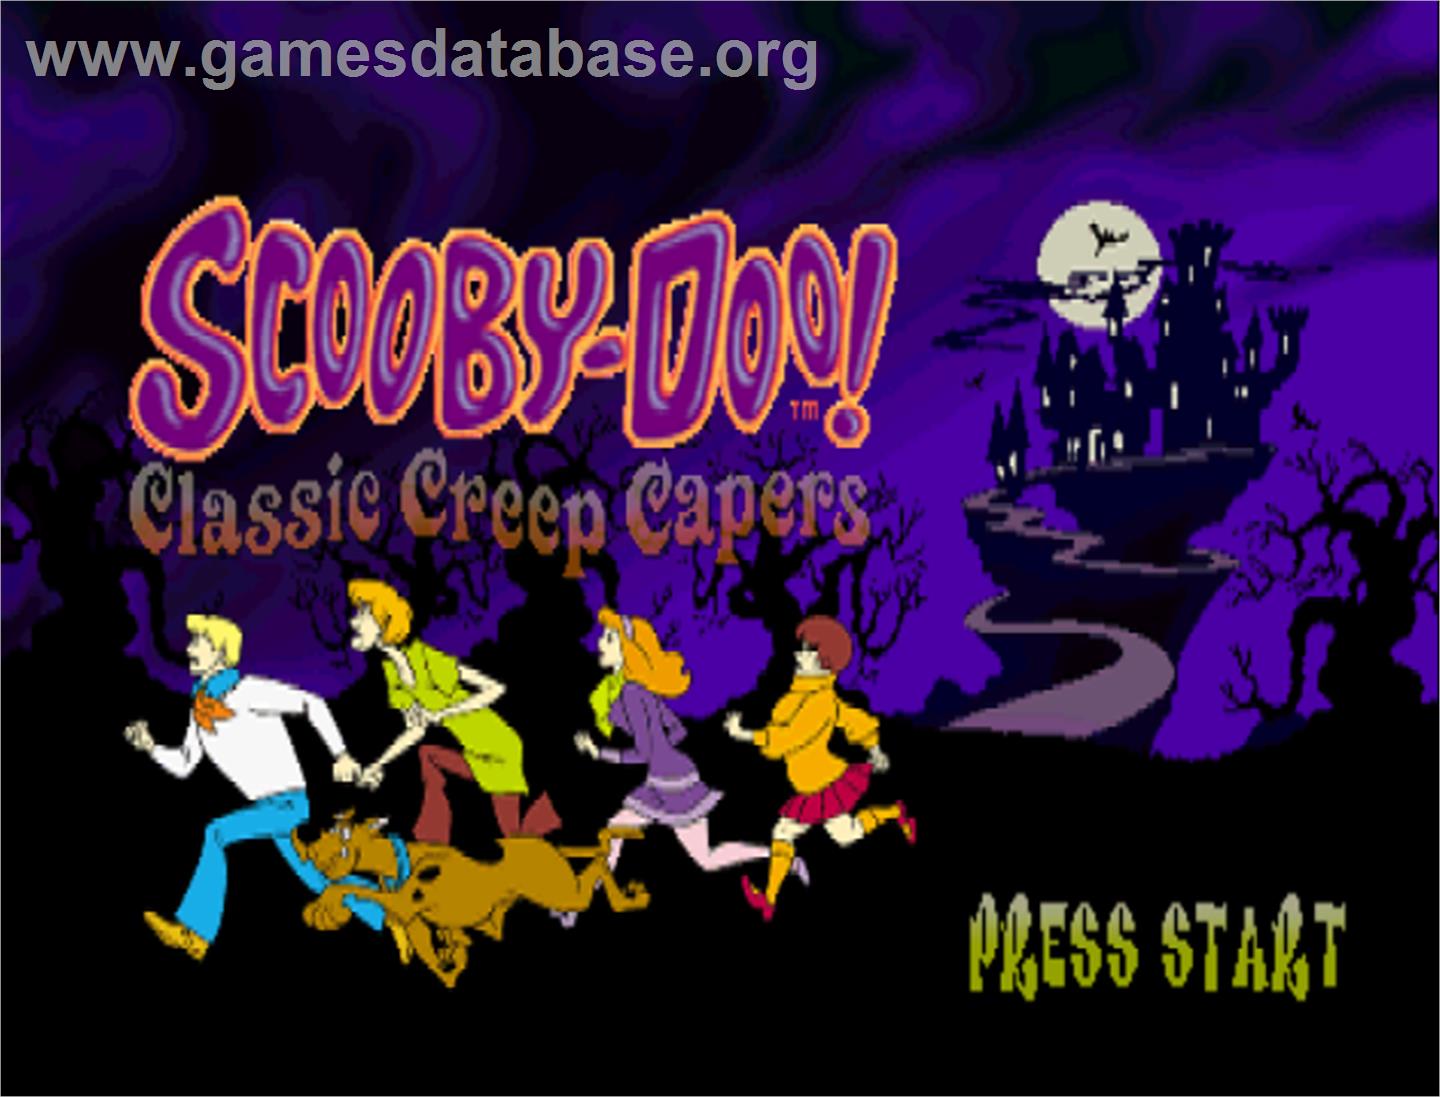 Scooby Doo! Classic Creep Capers - Nintendo N64 - Artwork - Title Screen